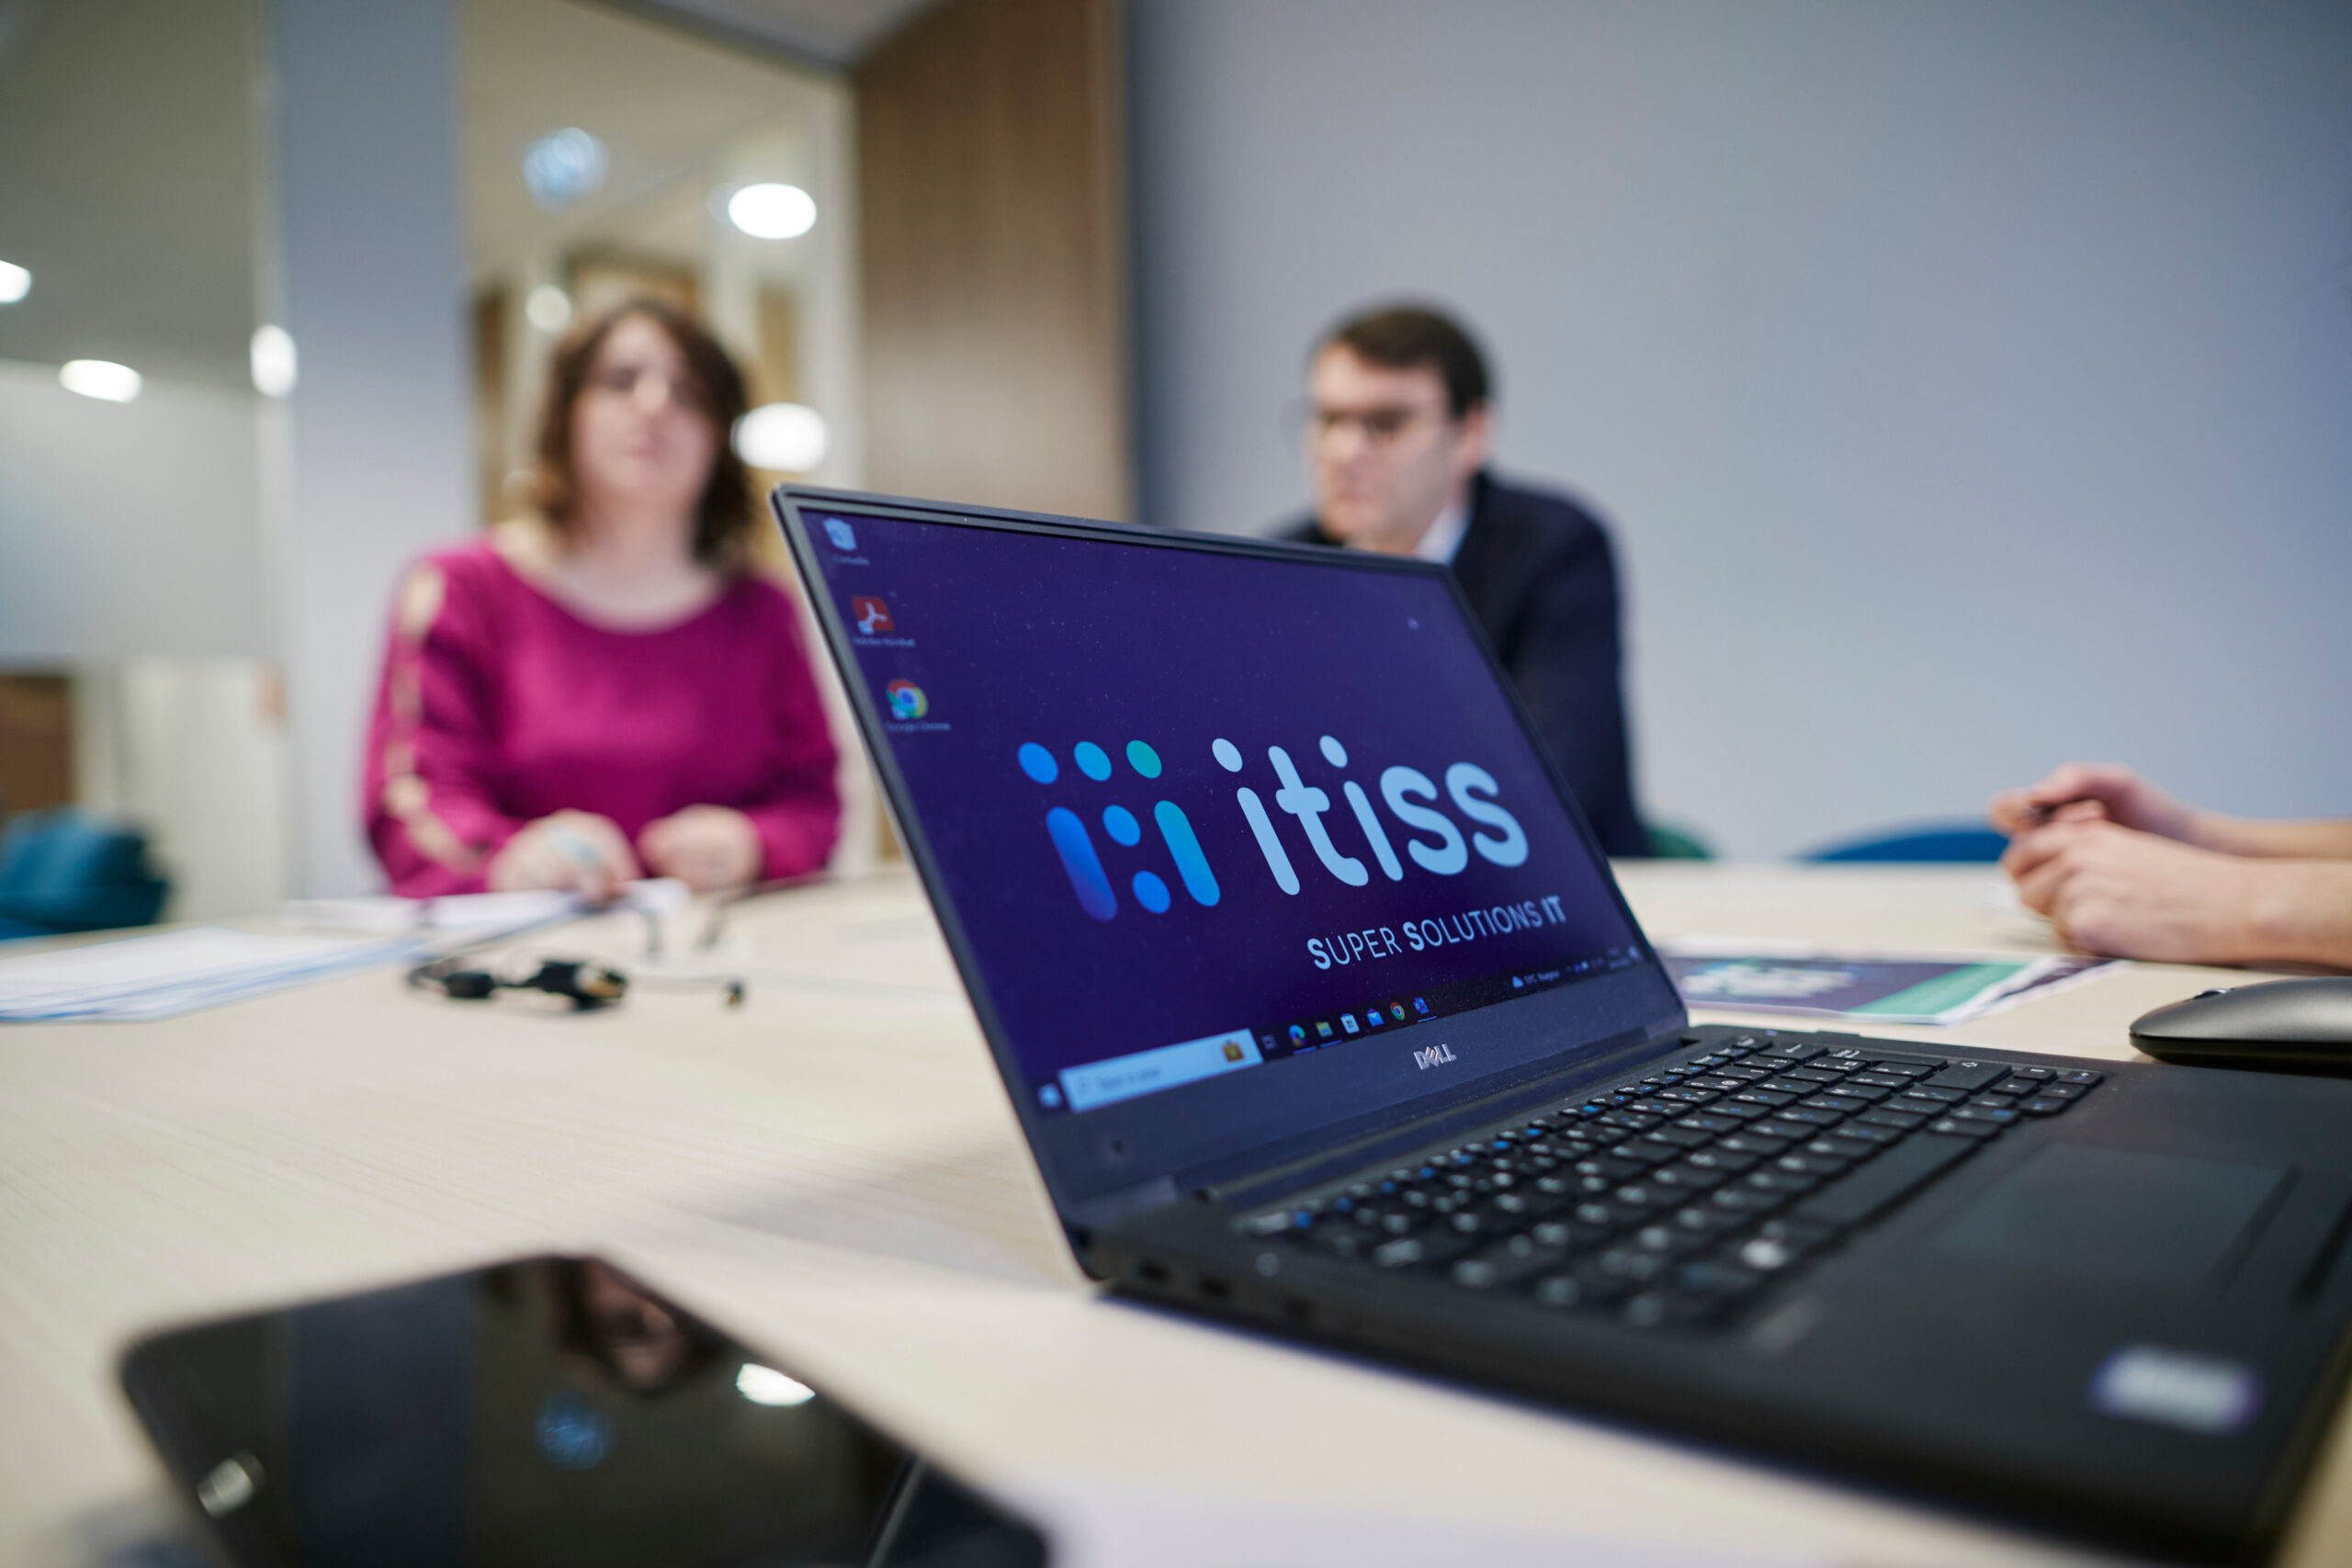 itiss - Super Solutions IT